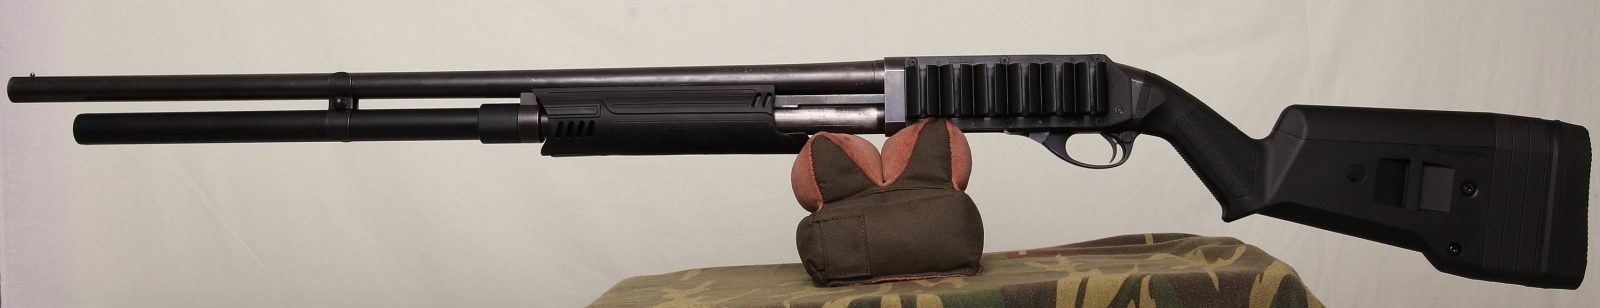 Magpul Stock on Remington 870.